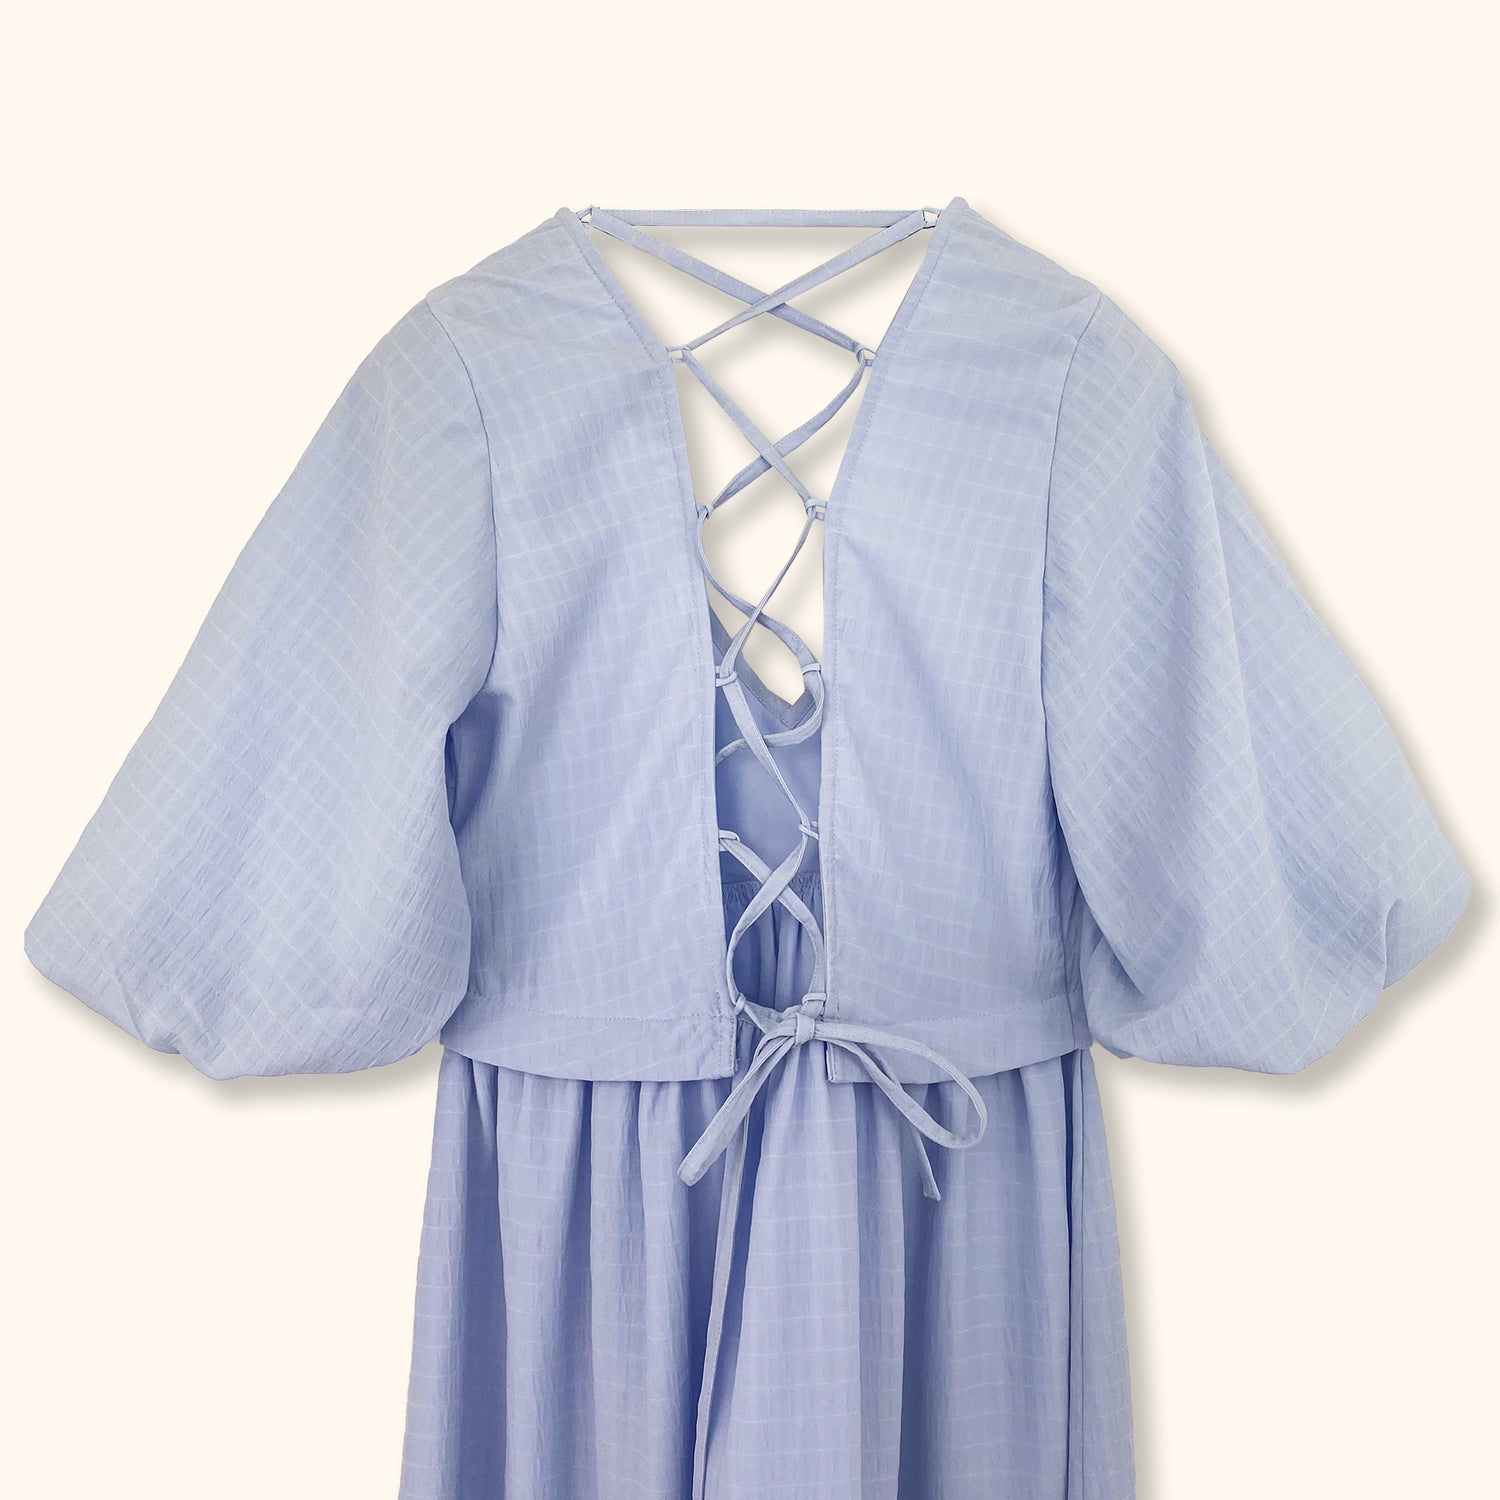 Omnes Light Blue Puff Sleeve Midi Dress - Size 8 - Omnes - Dresses